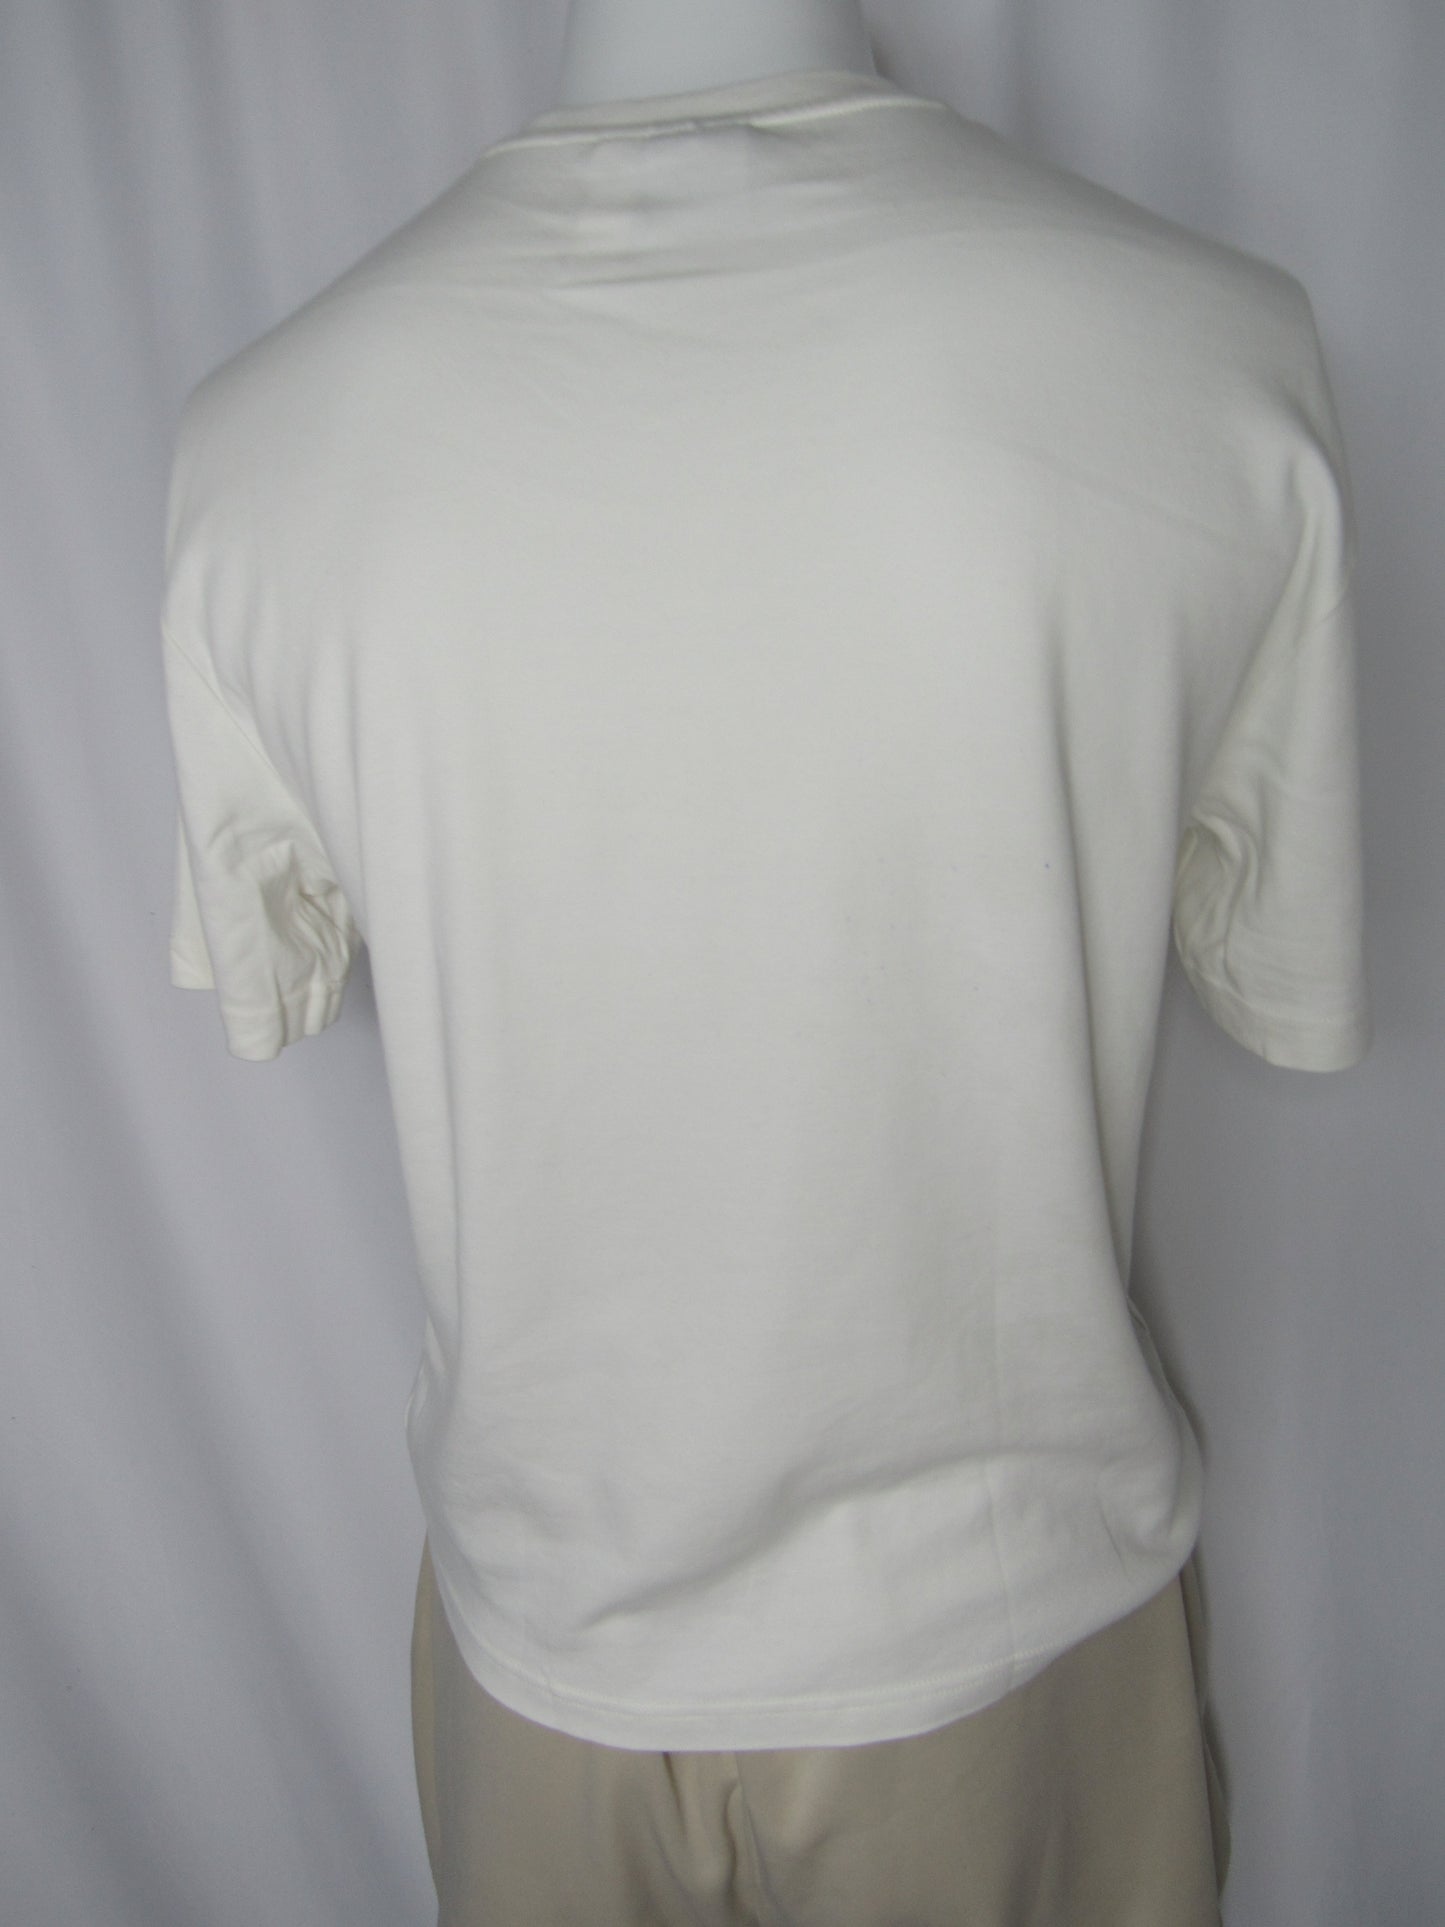 ZARA Shirt - Size Medium